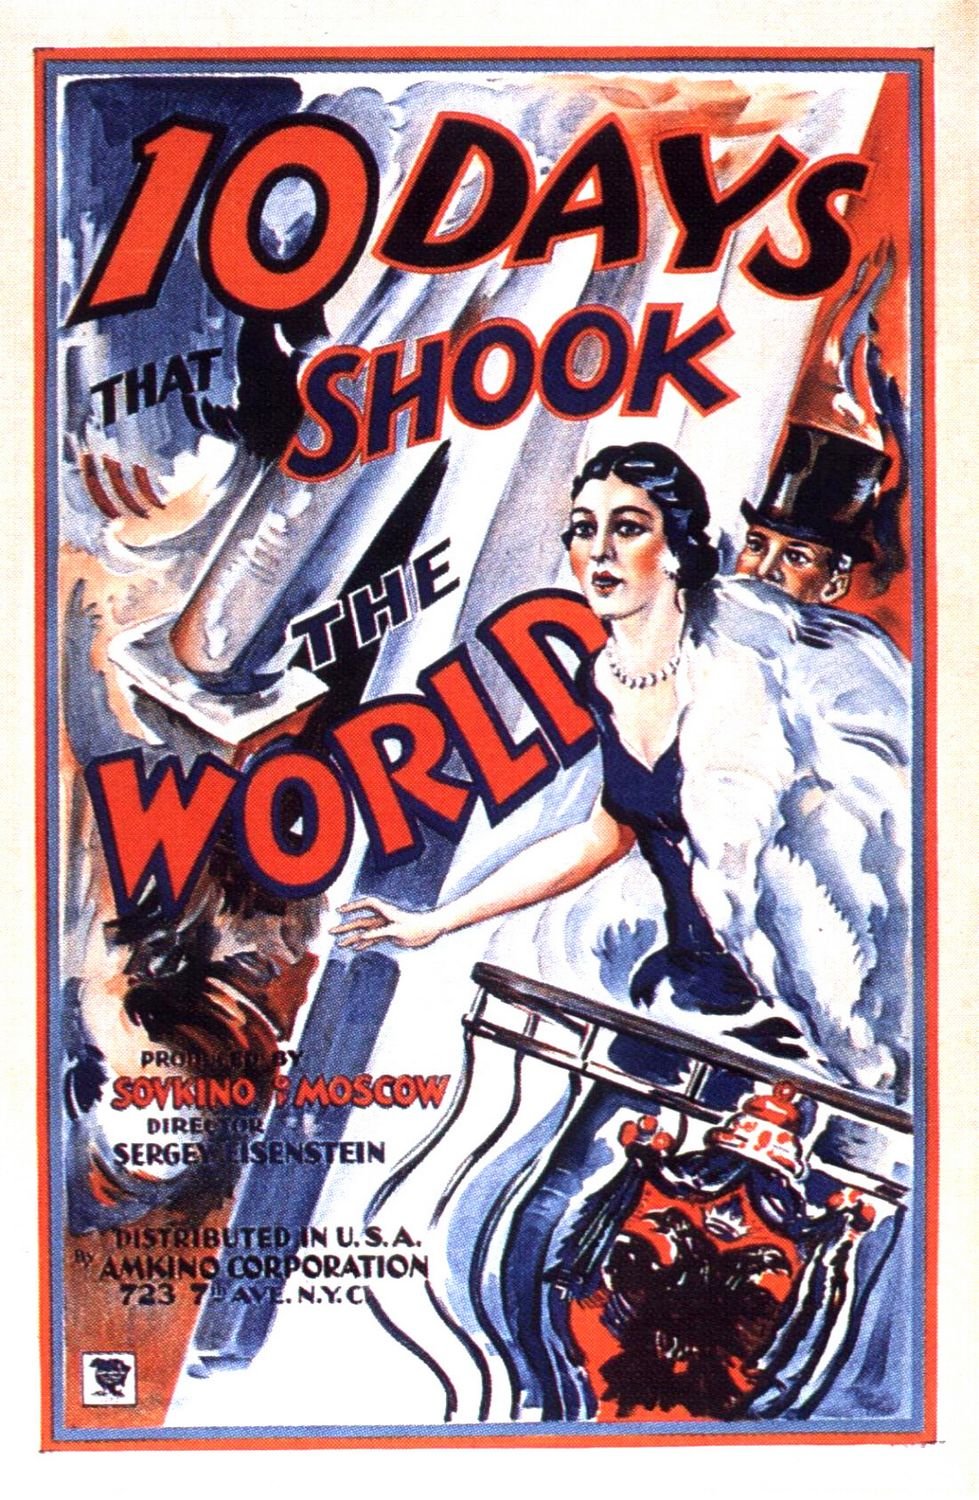 October: Ten Days That Shook the World (1928)